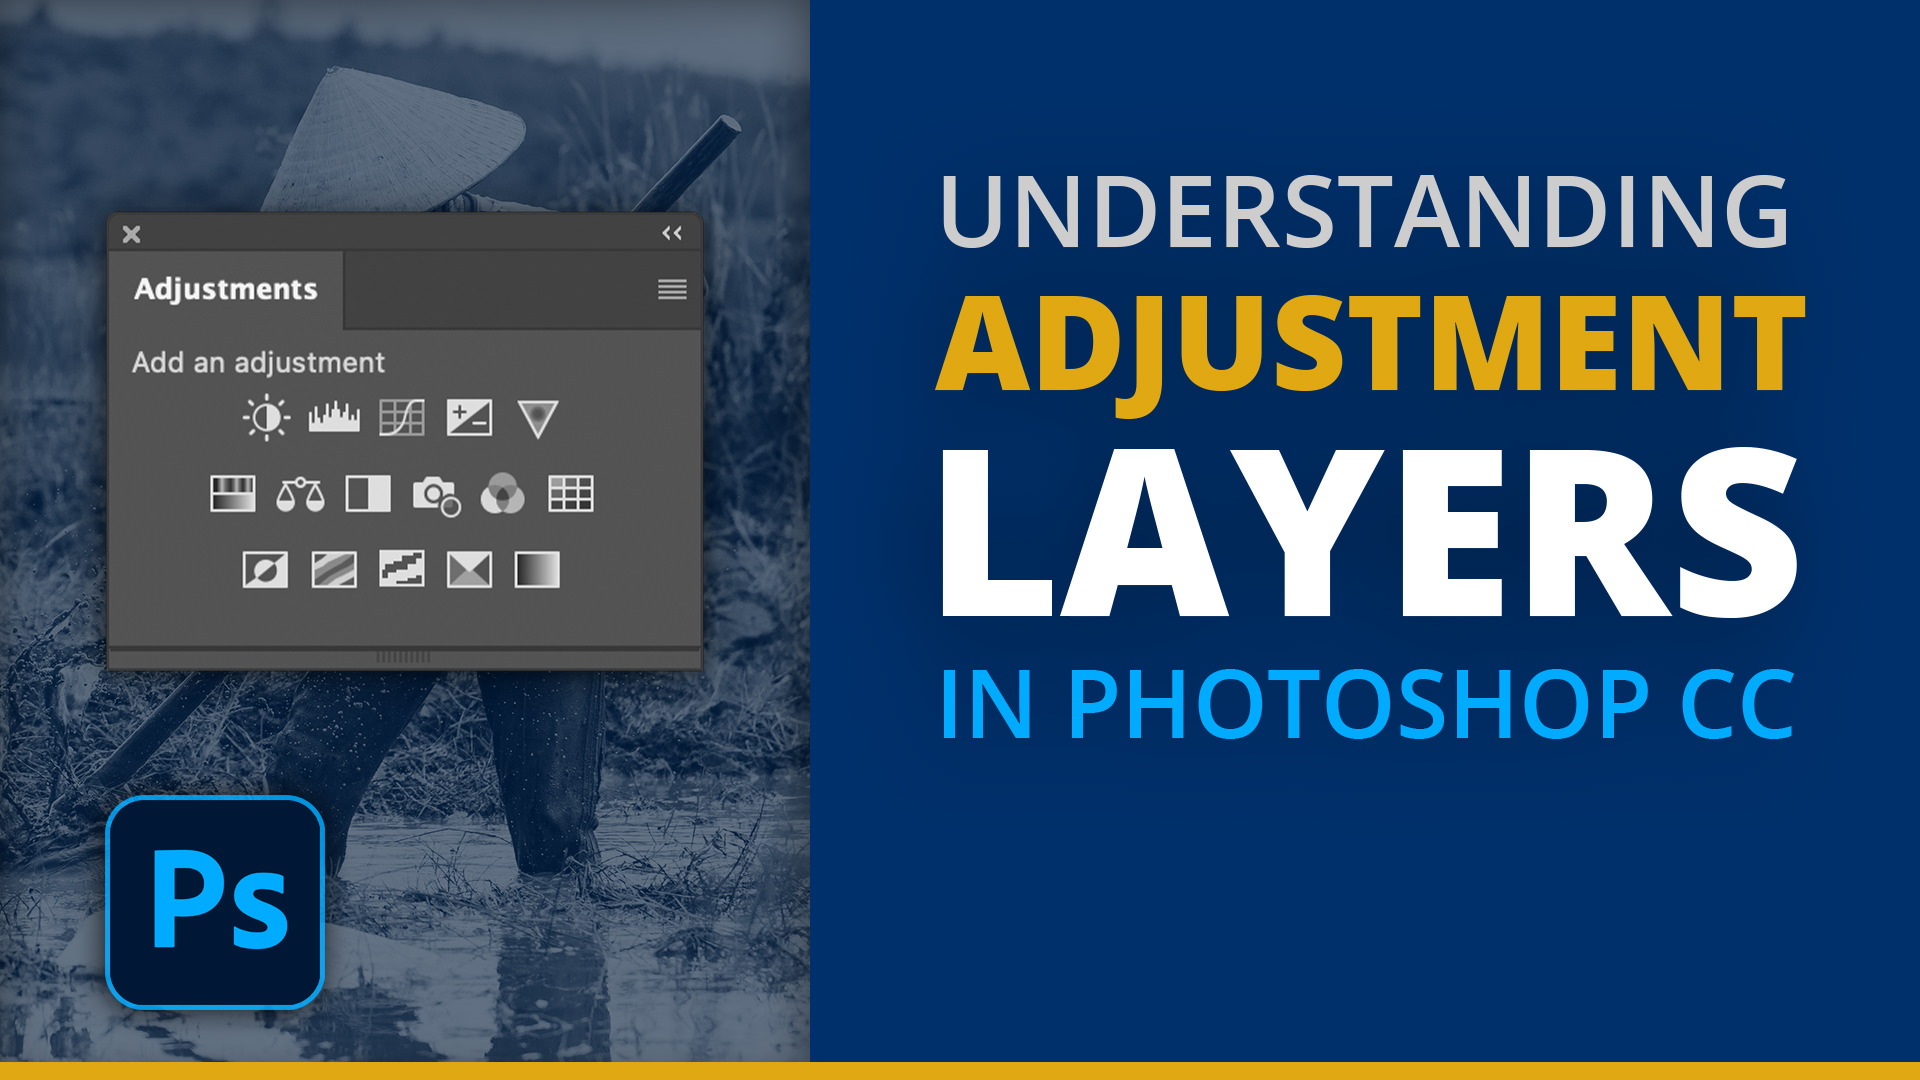 Understanding Adjustment layers in Photoshop CC